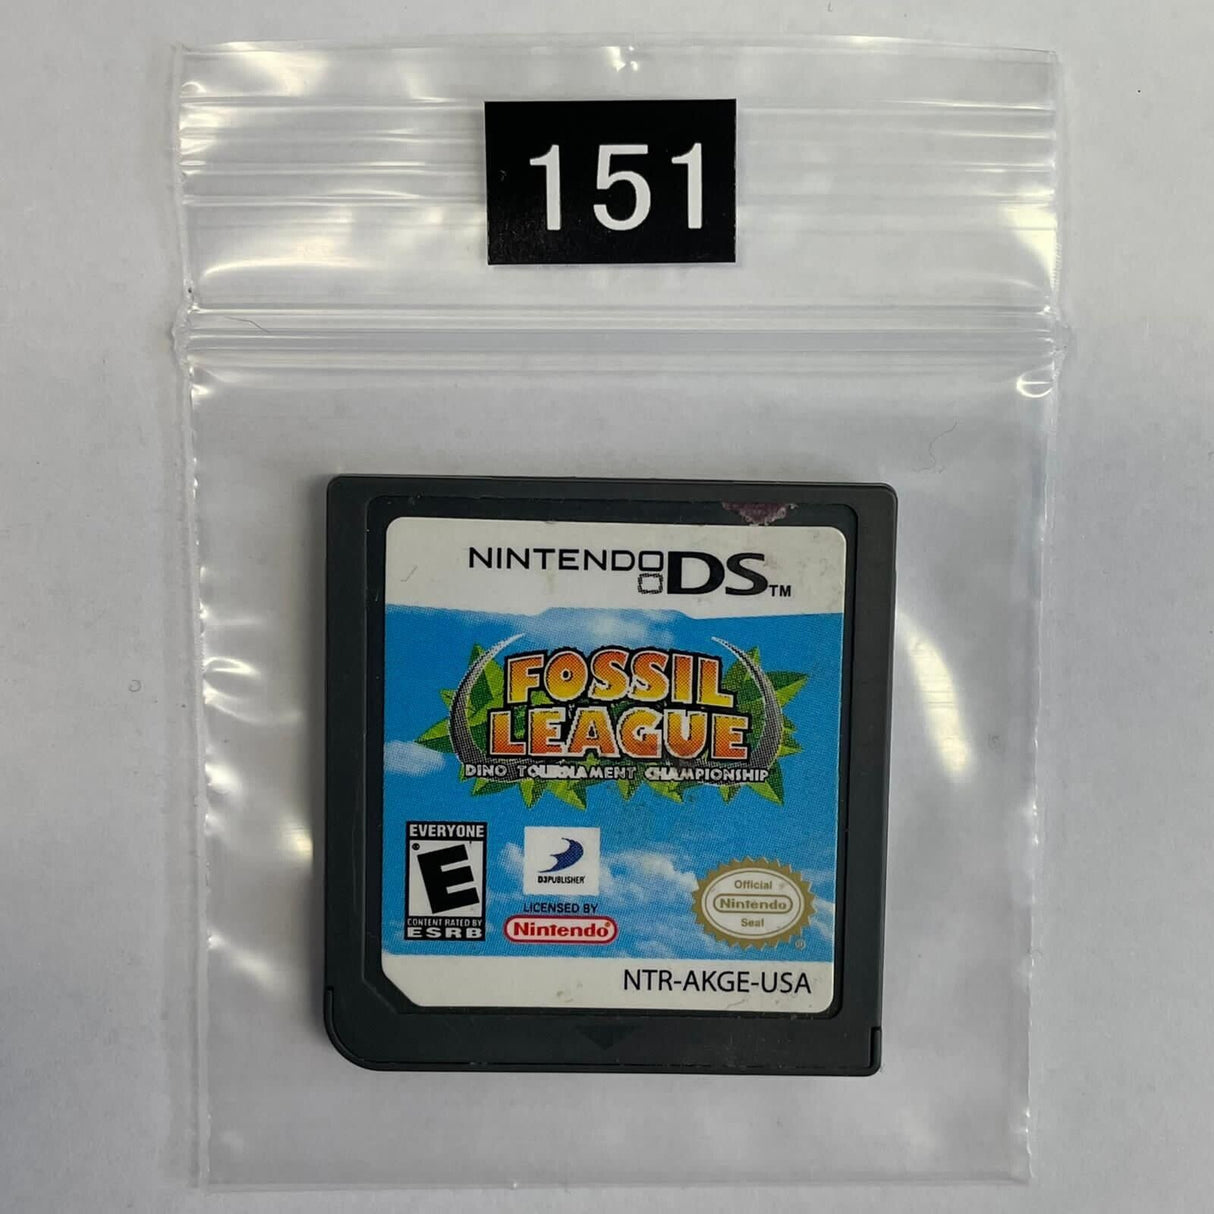 Fossil League Nintendo DS Game Cartridge